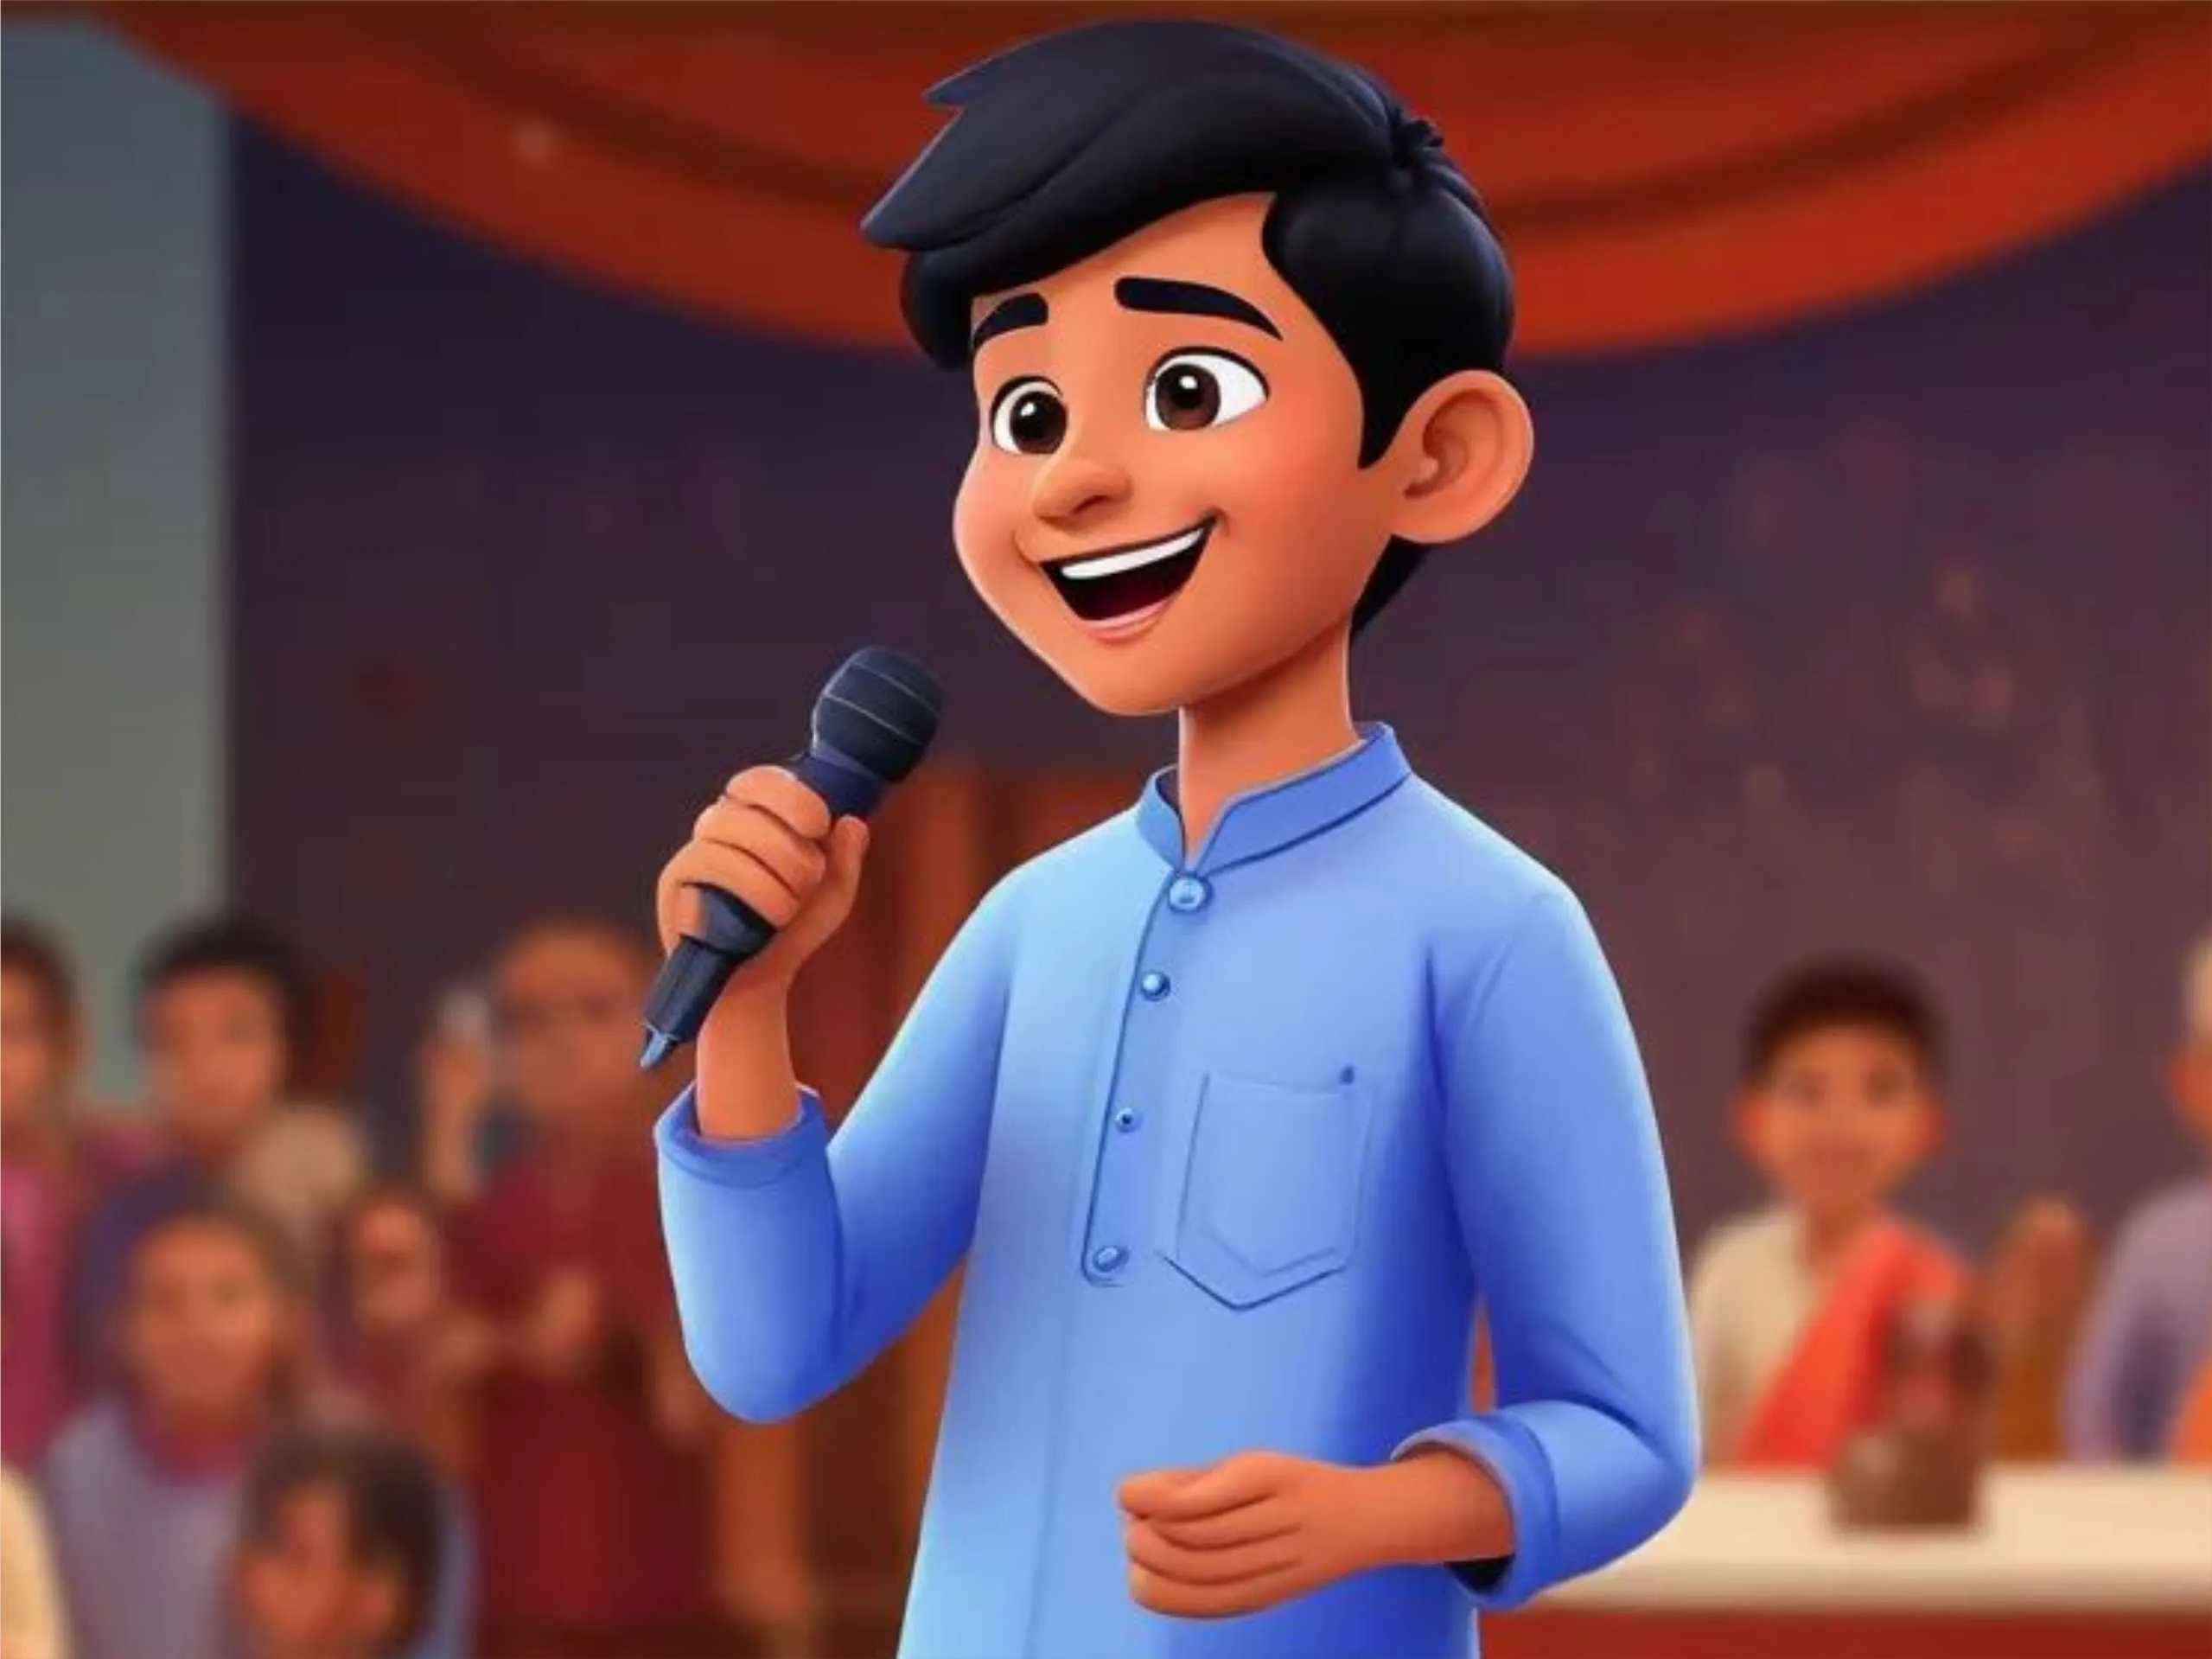 School boy giving speech on stage cartoon image